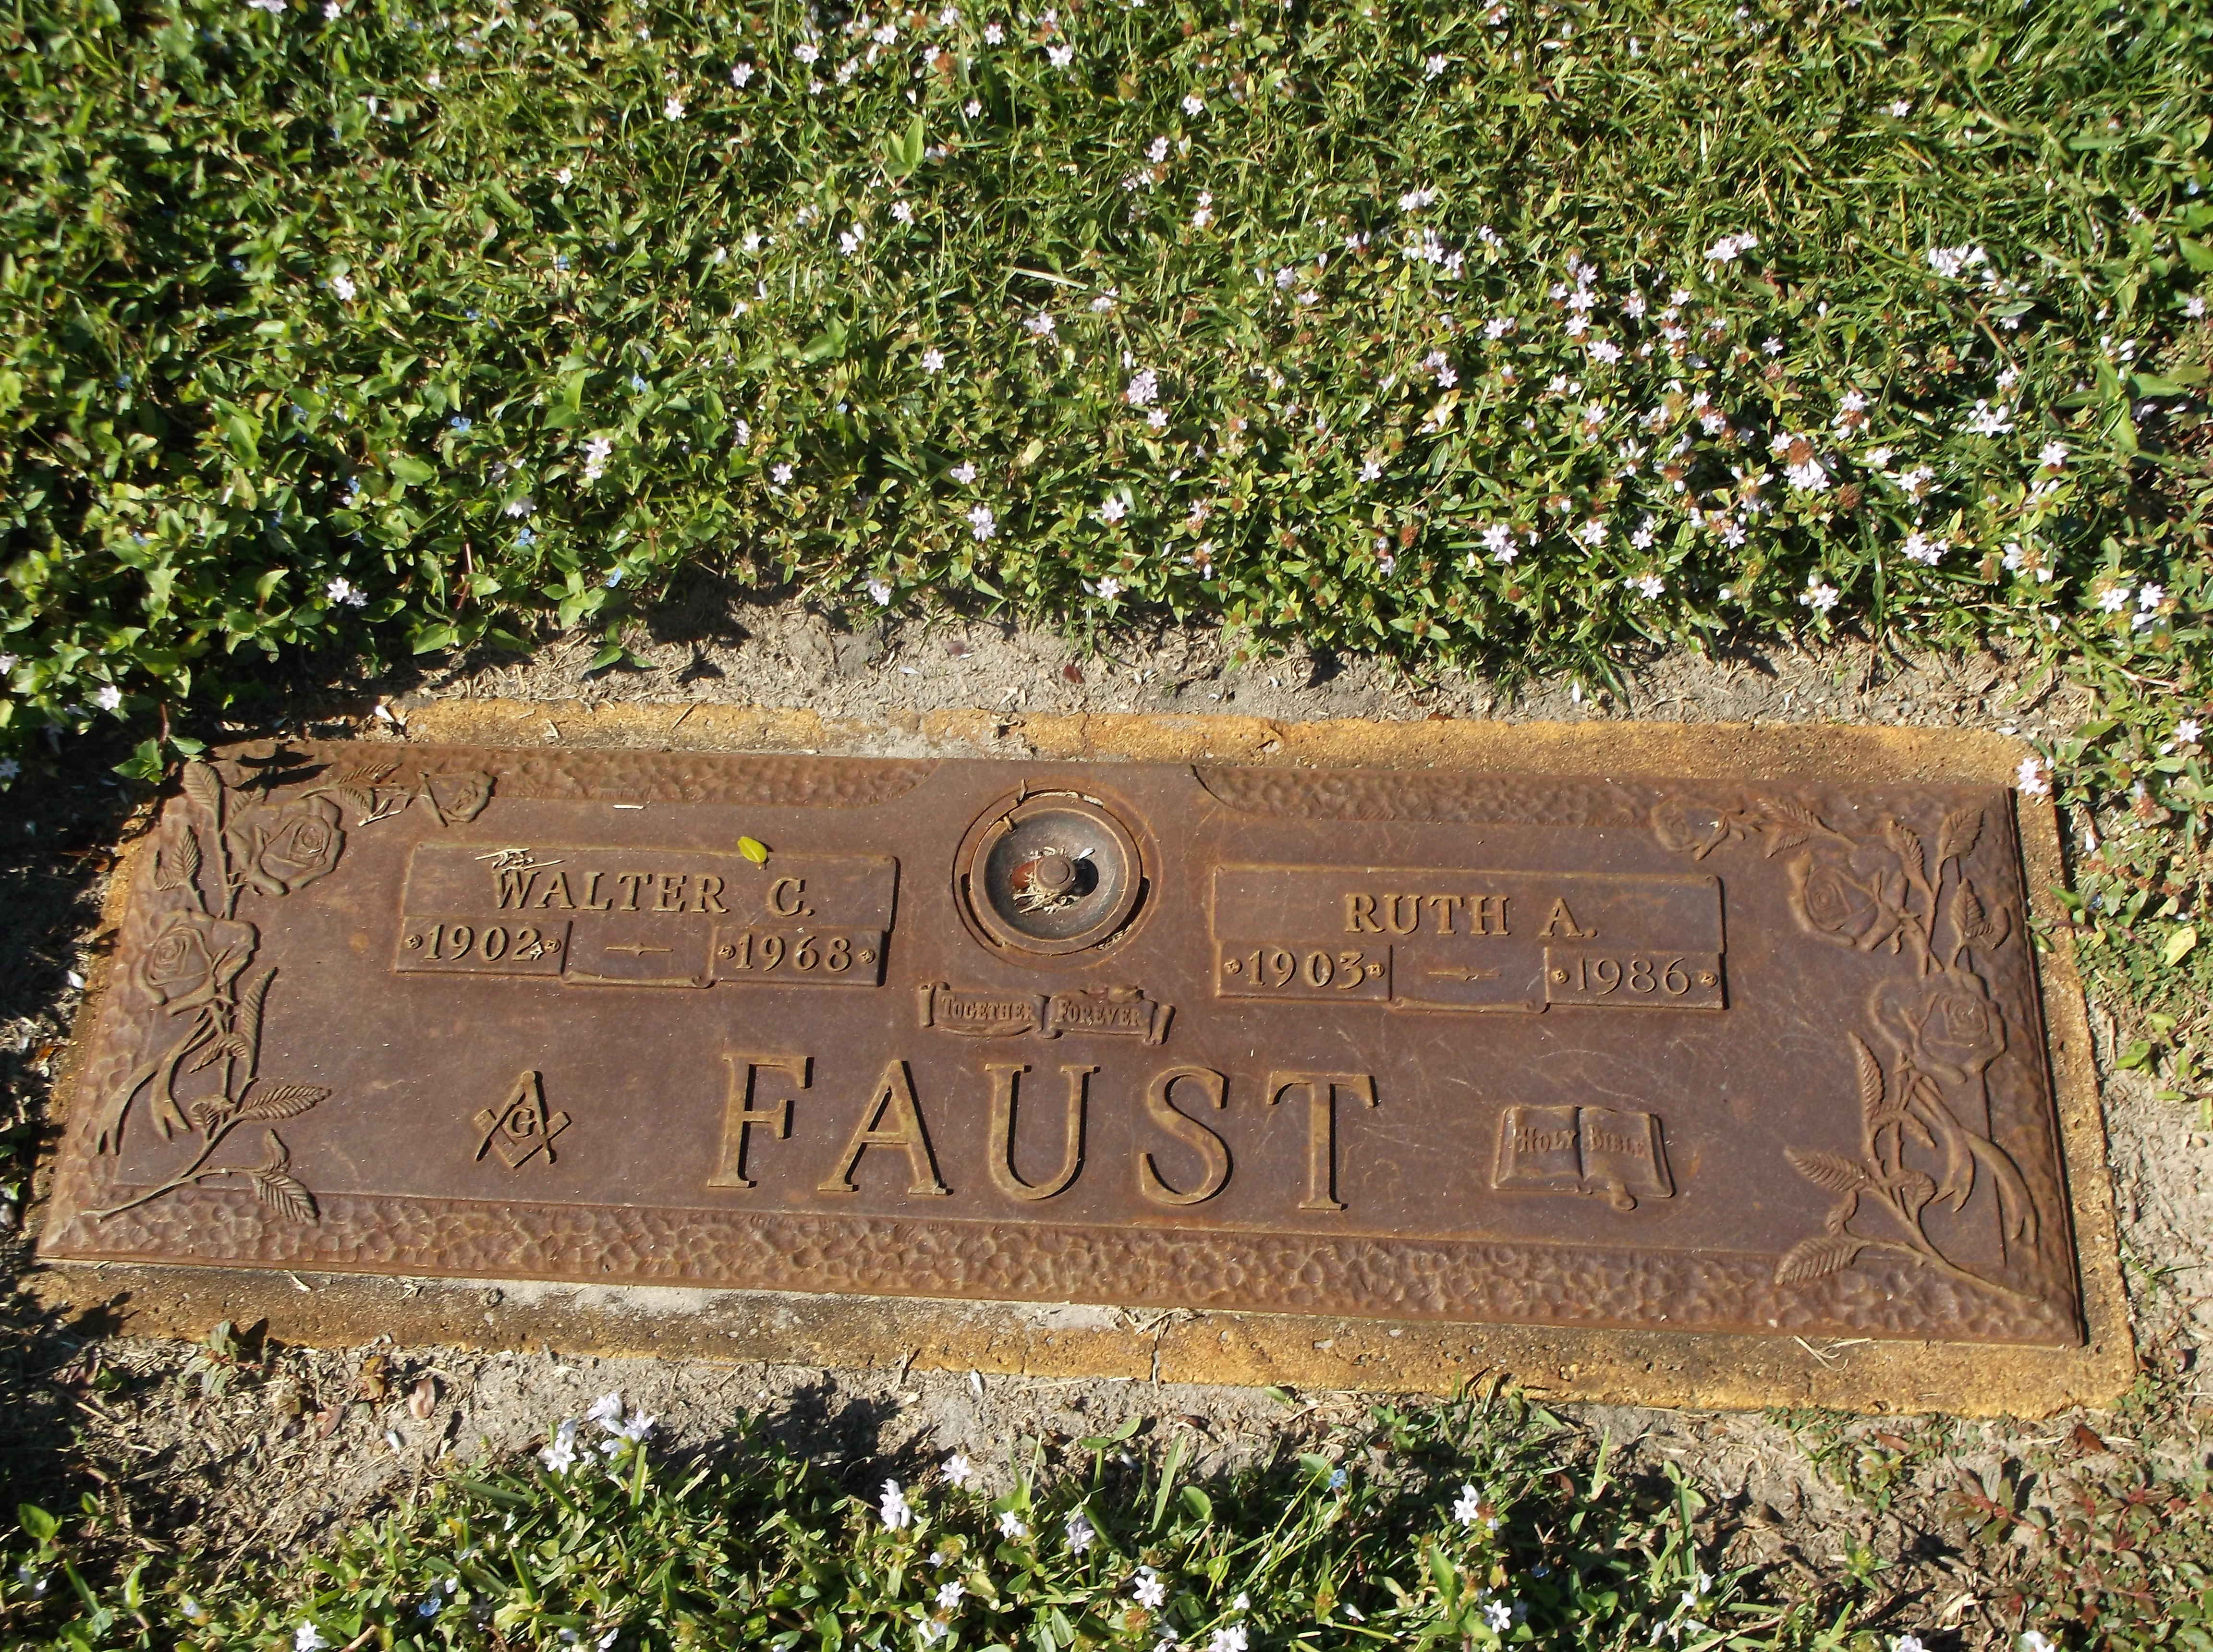 Walter C Faust